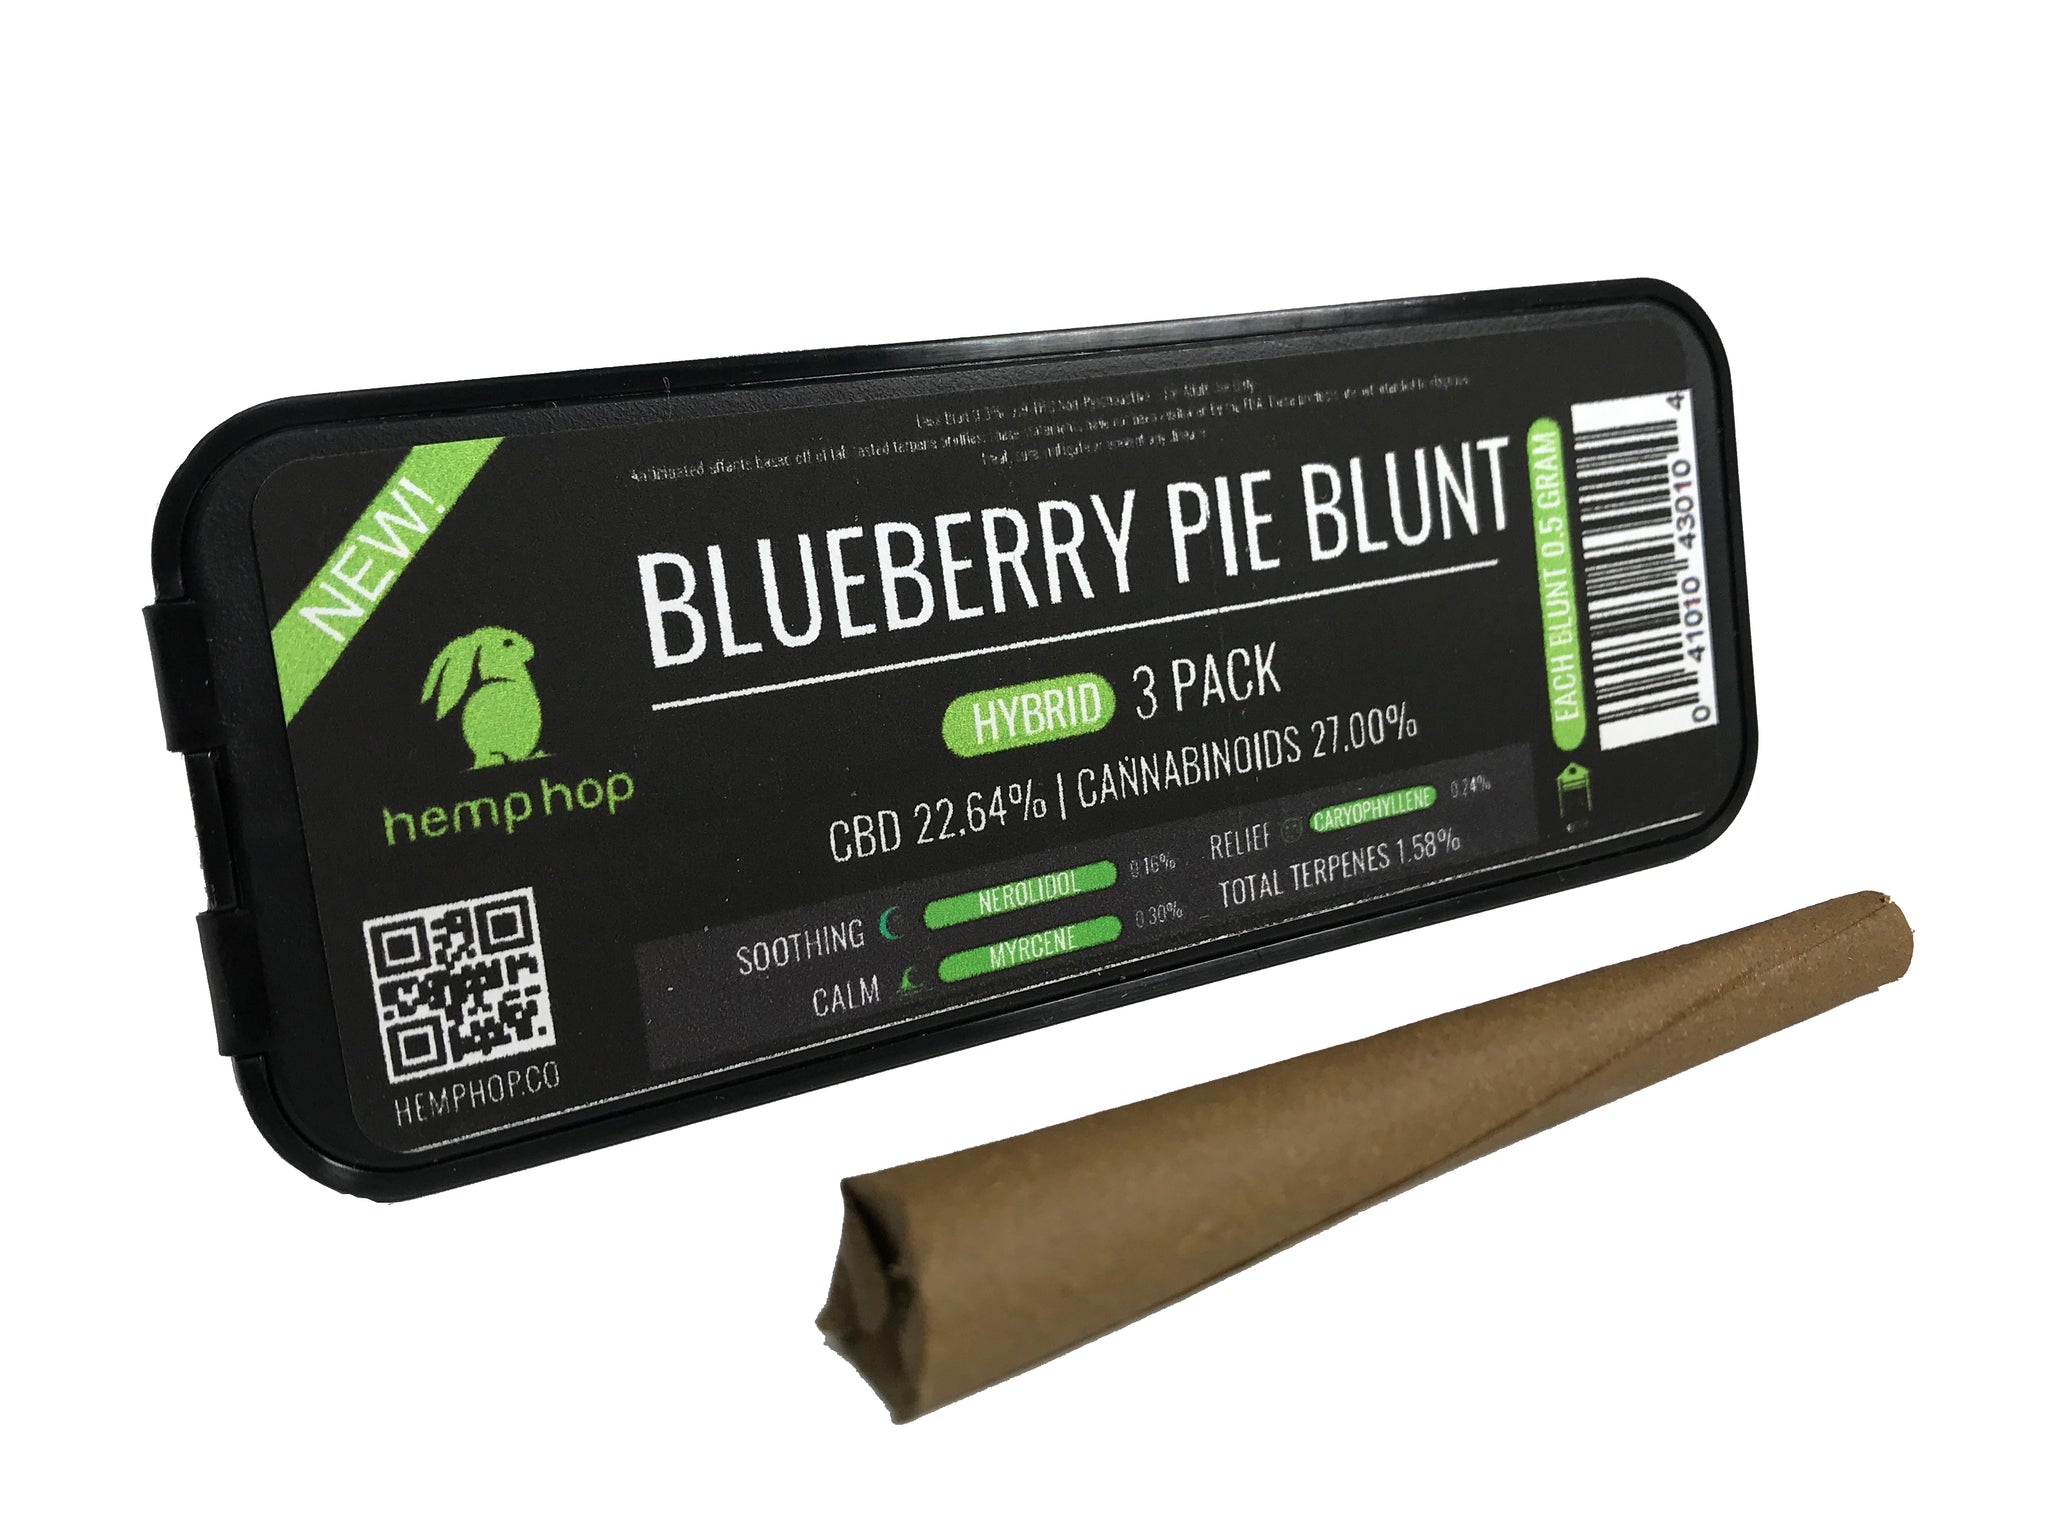 Blueberry Pie Blunts 3 Pack